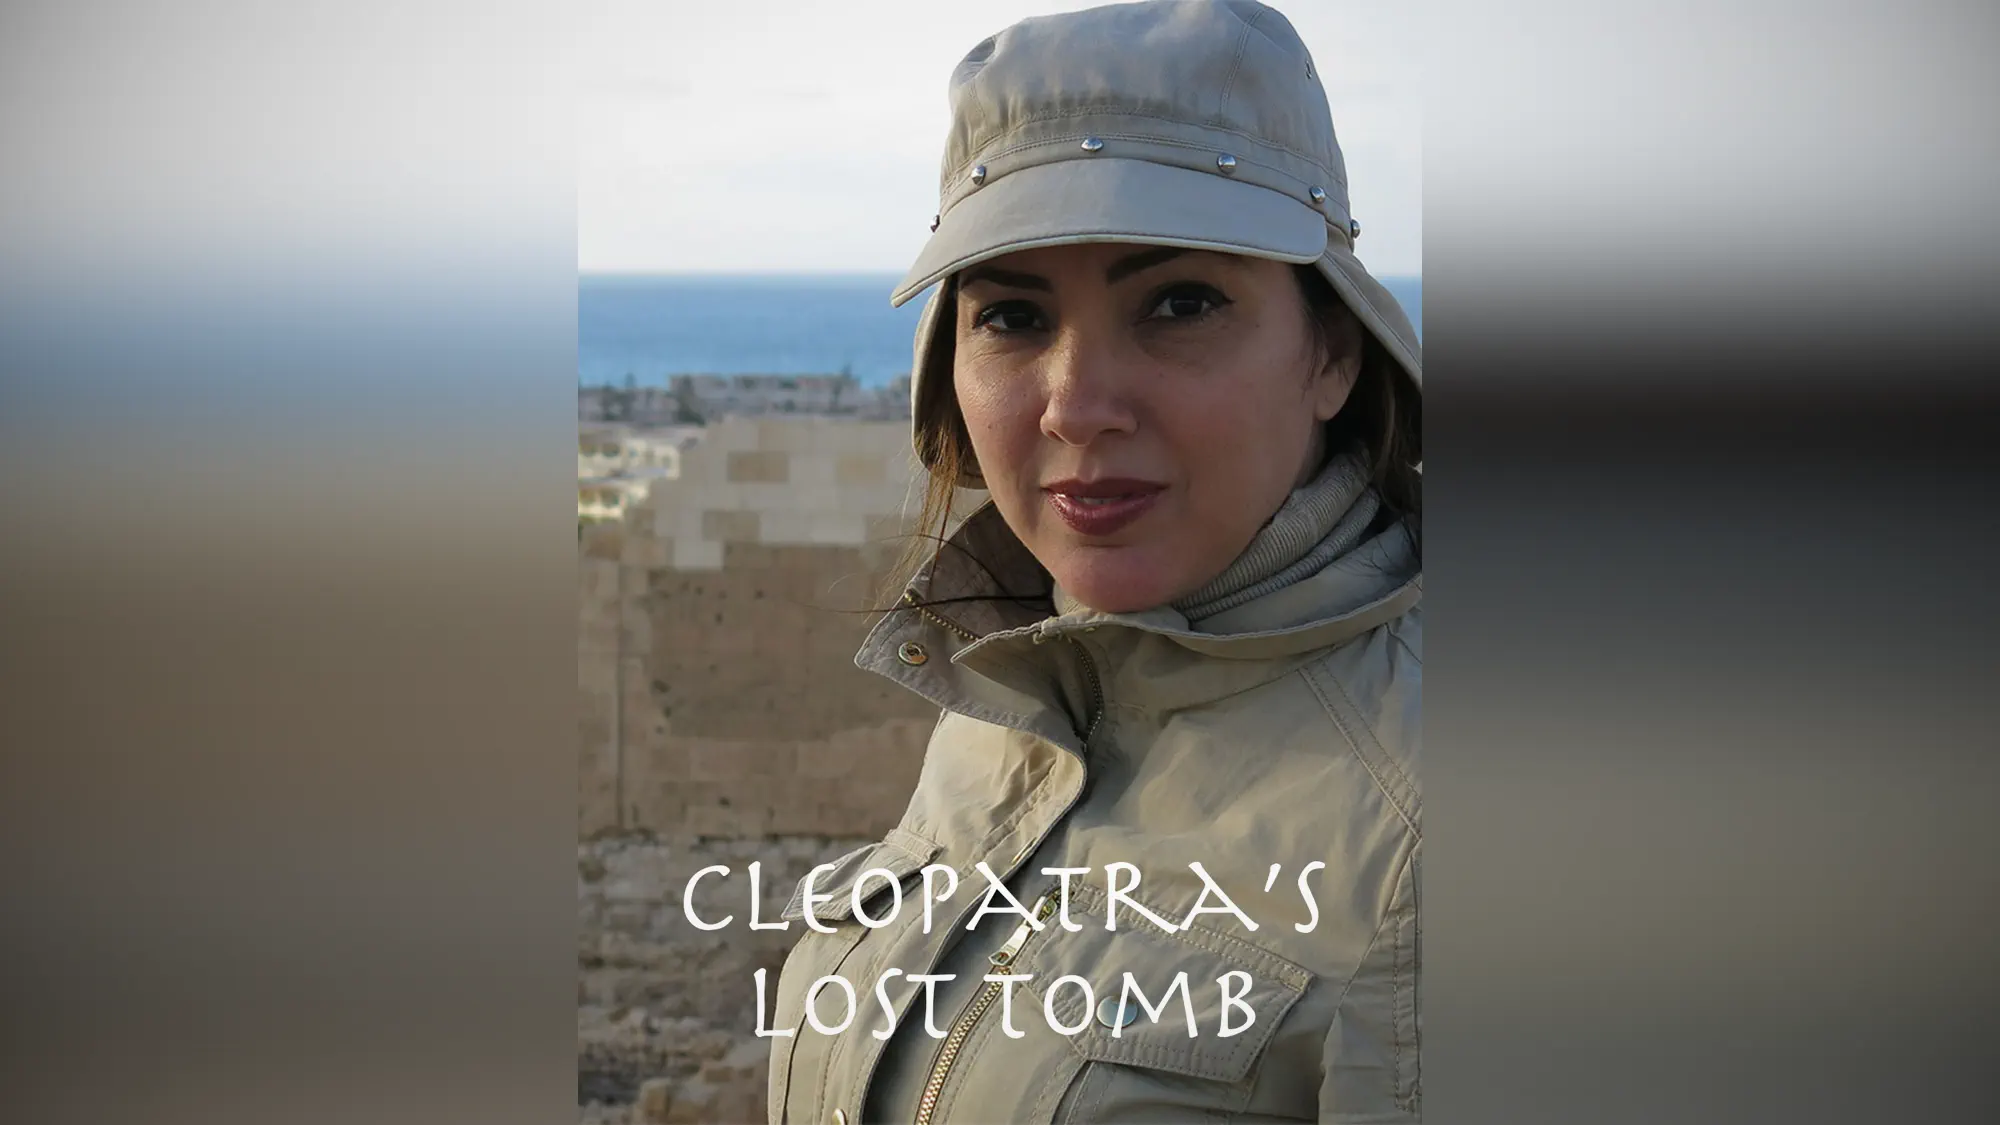 Cleopatra's Lost Tomb